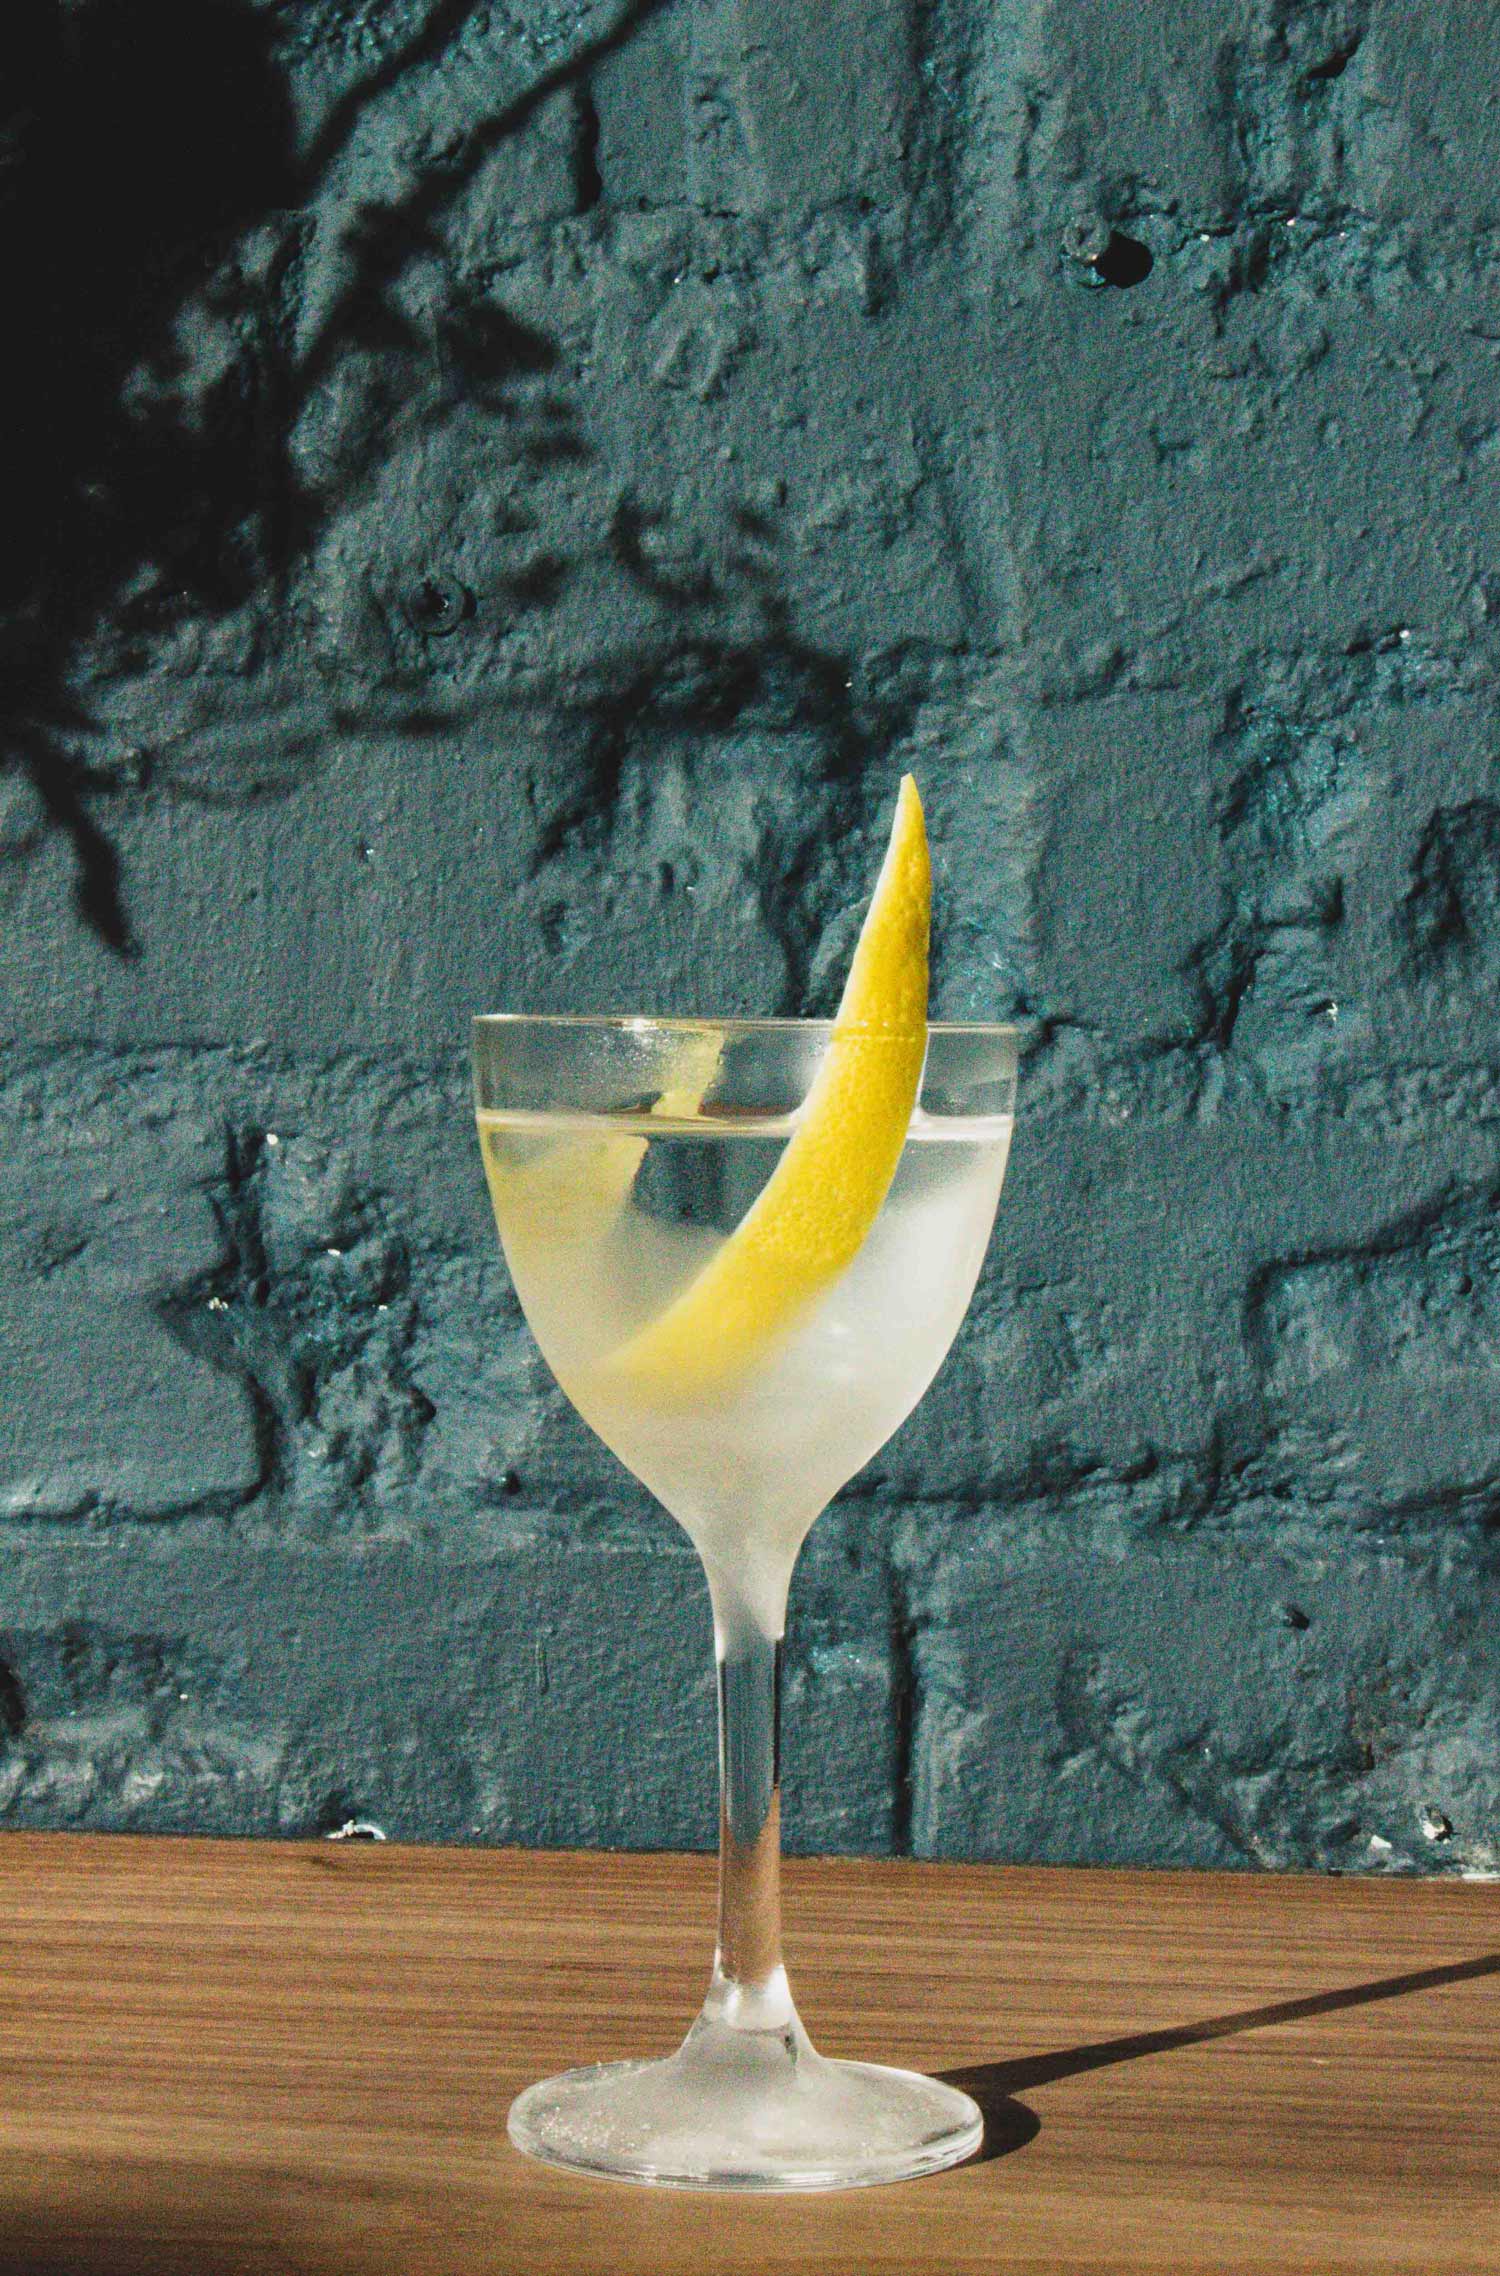 Gin Martini with a twist